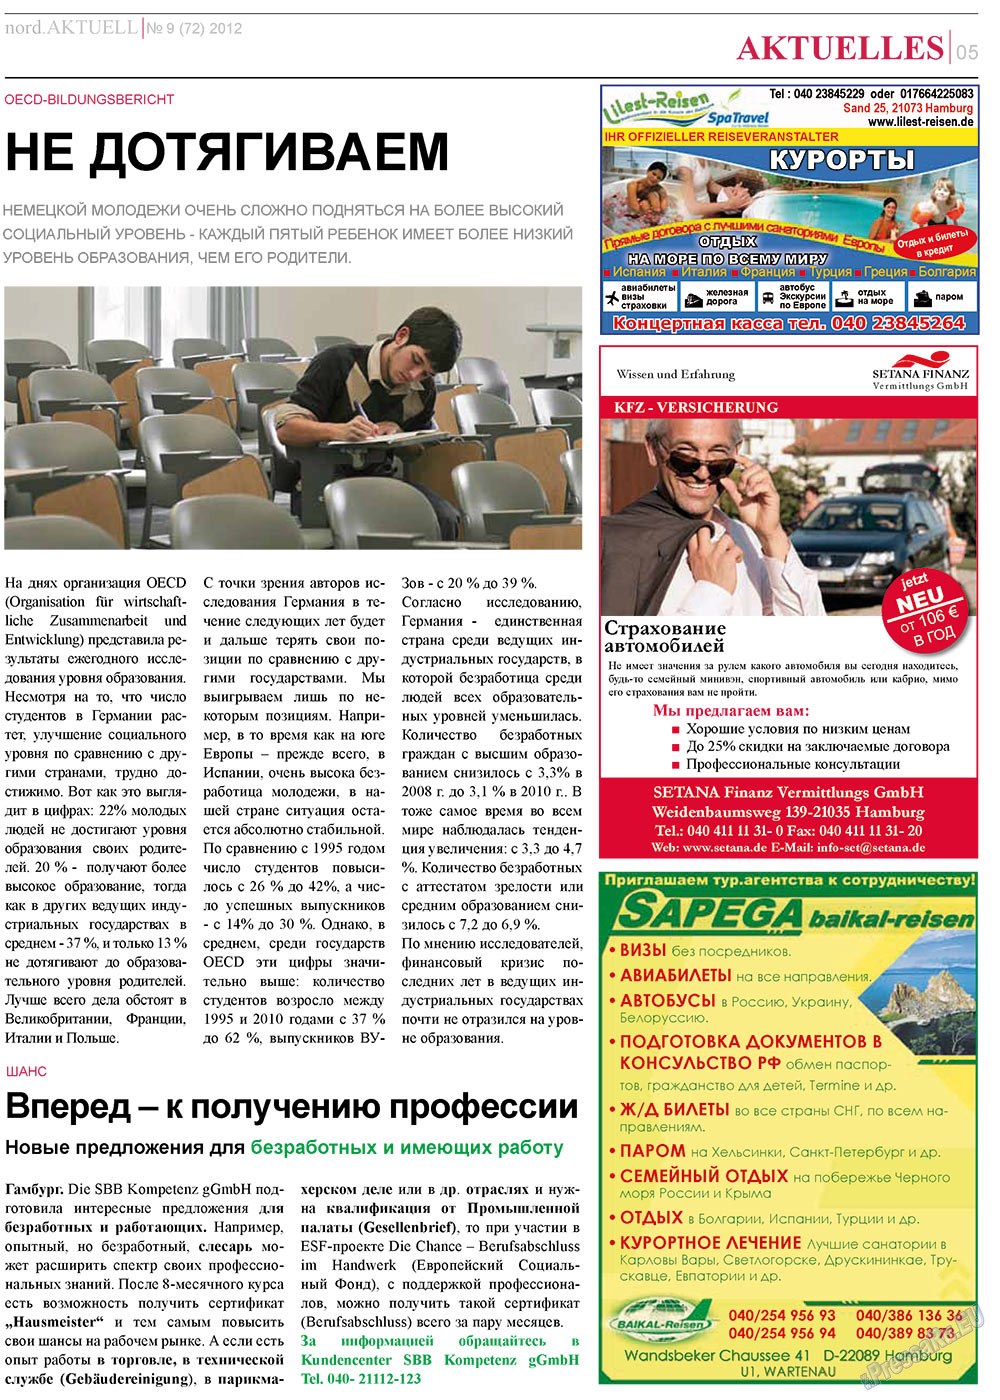 nord.Aktuell, газета. 2012 №9 стр.5